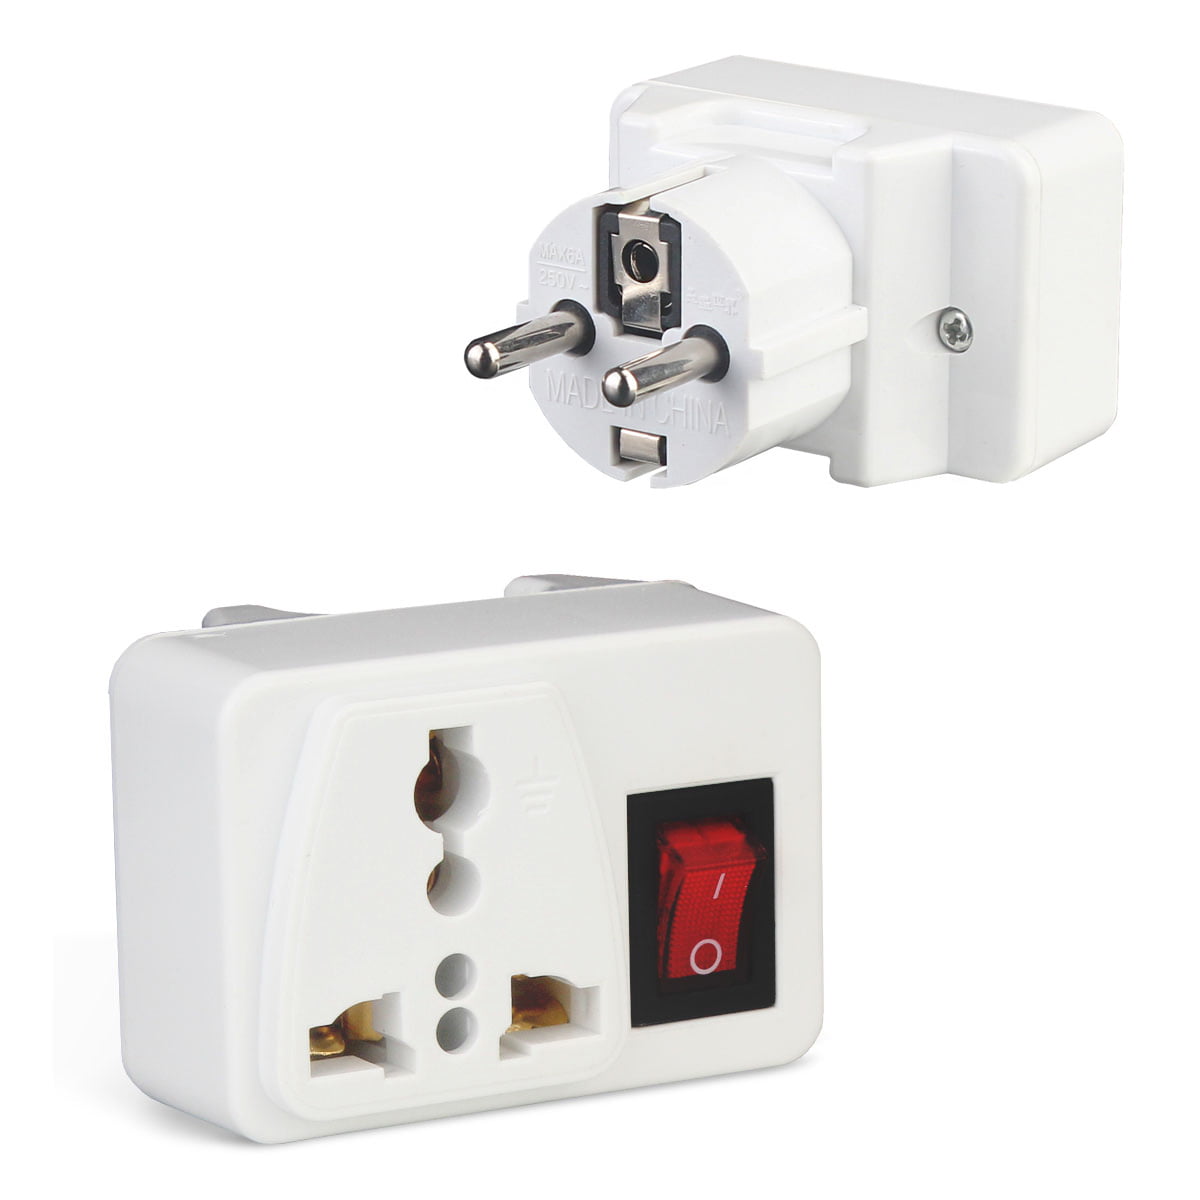 International Travel EU Plug Electric Plug Power Source Charger Socket Adapter 